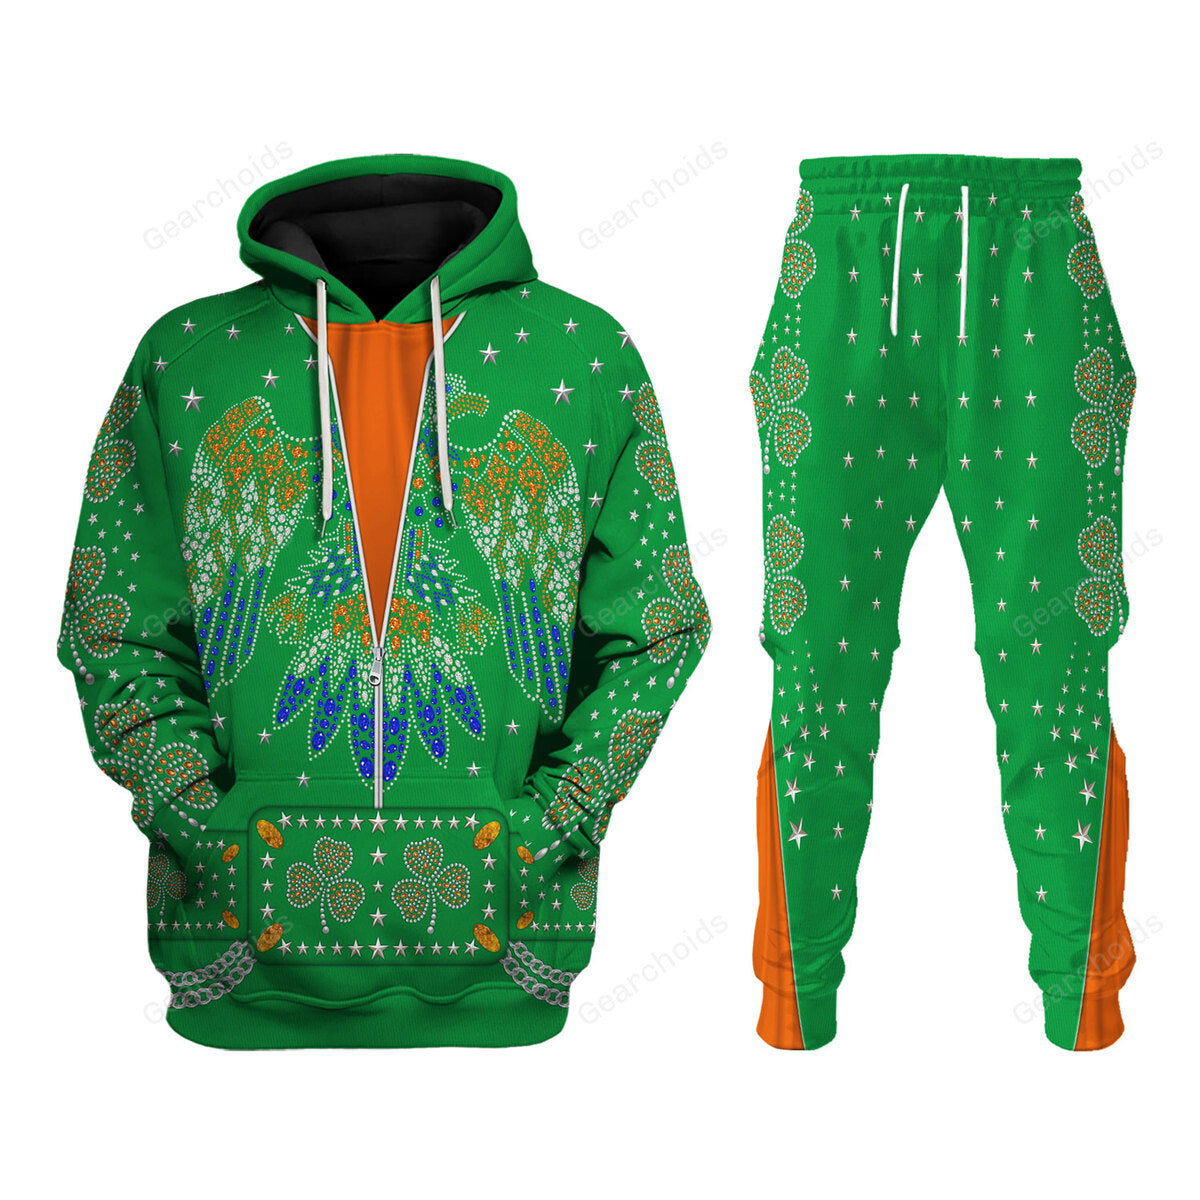 Celebrating The King Elvis Presley For St. Patrick's Day - Costume Cosplay Hoodie Sweatshirt Sweatpants